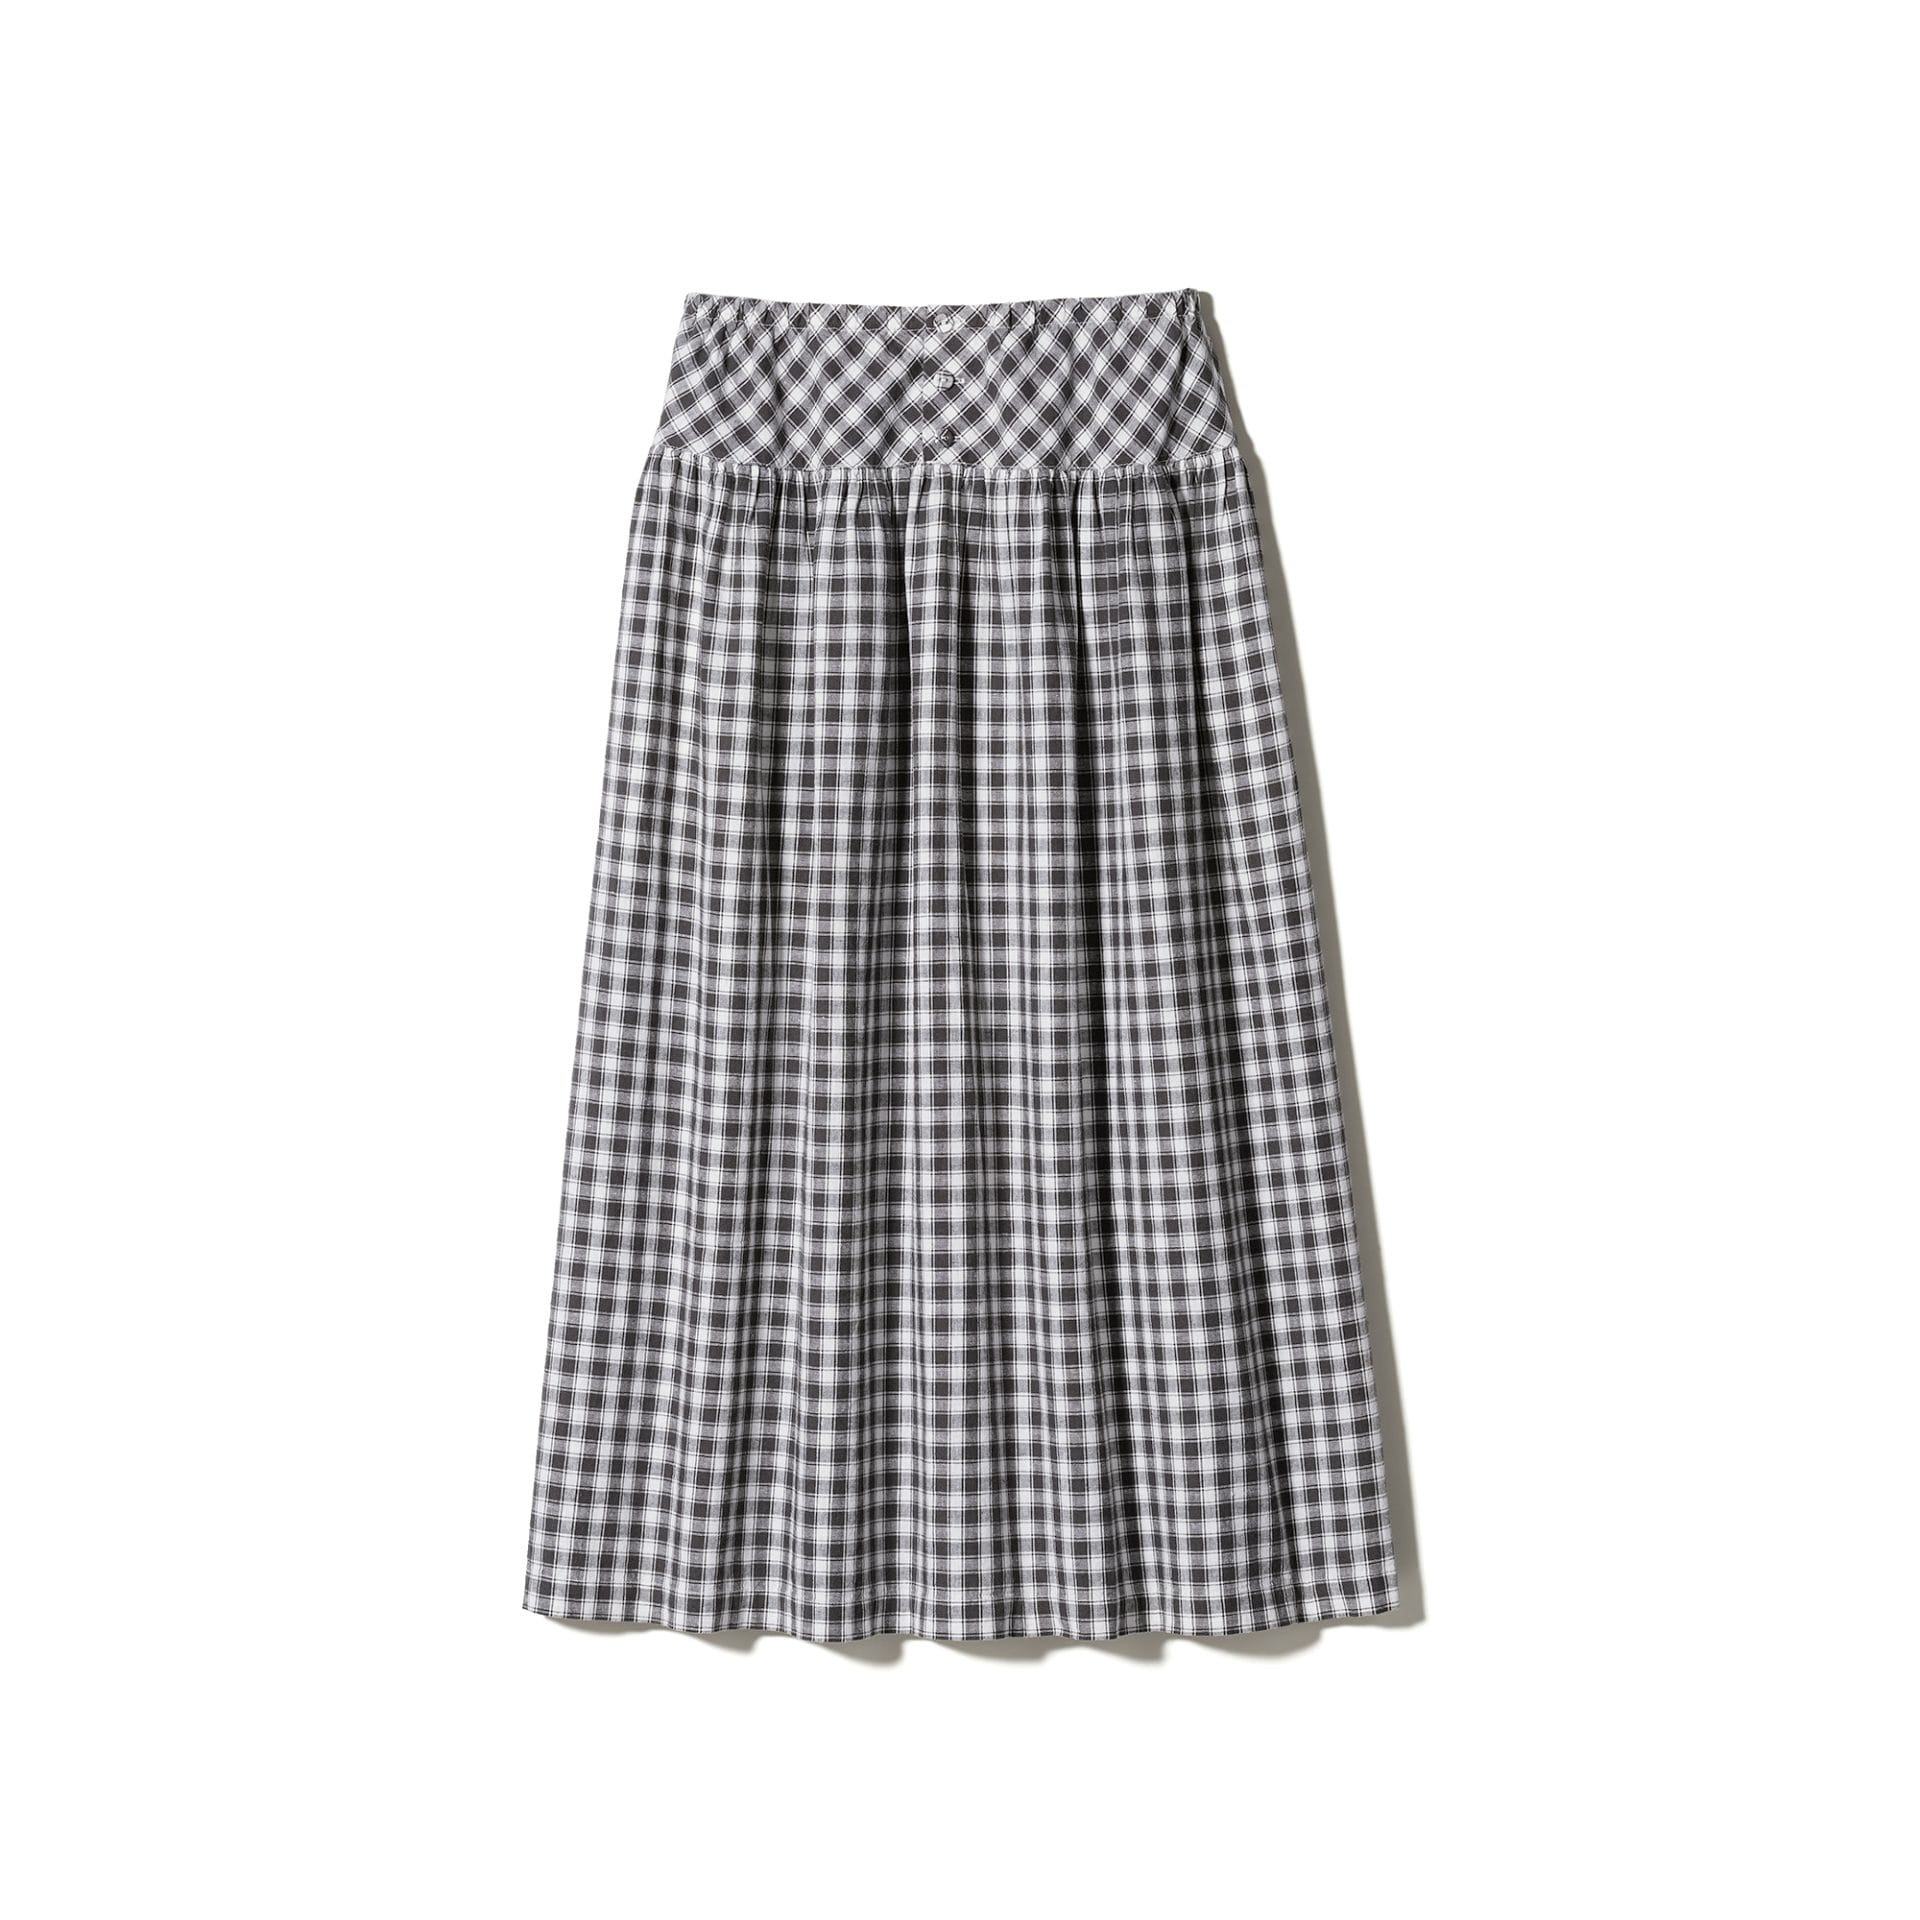 linen cotton gather skirt 08 dark gray